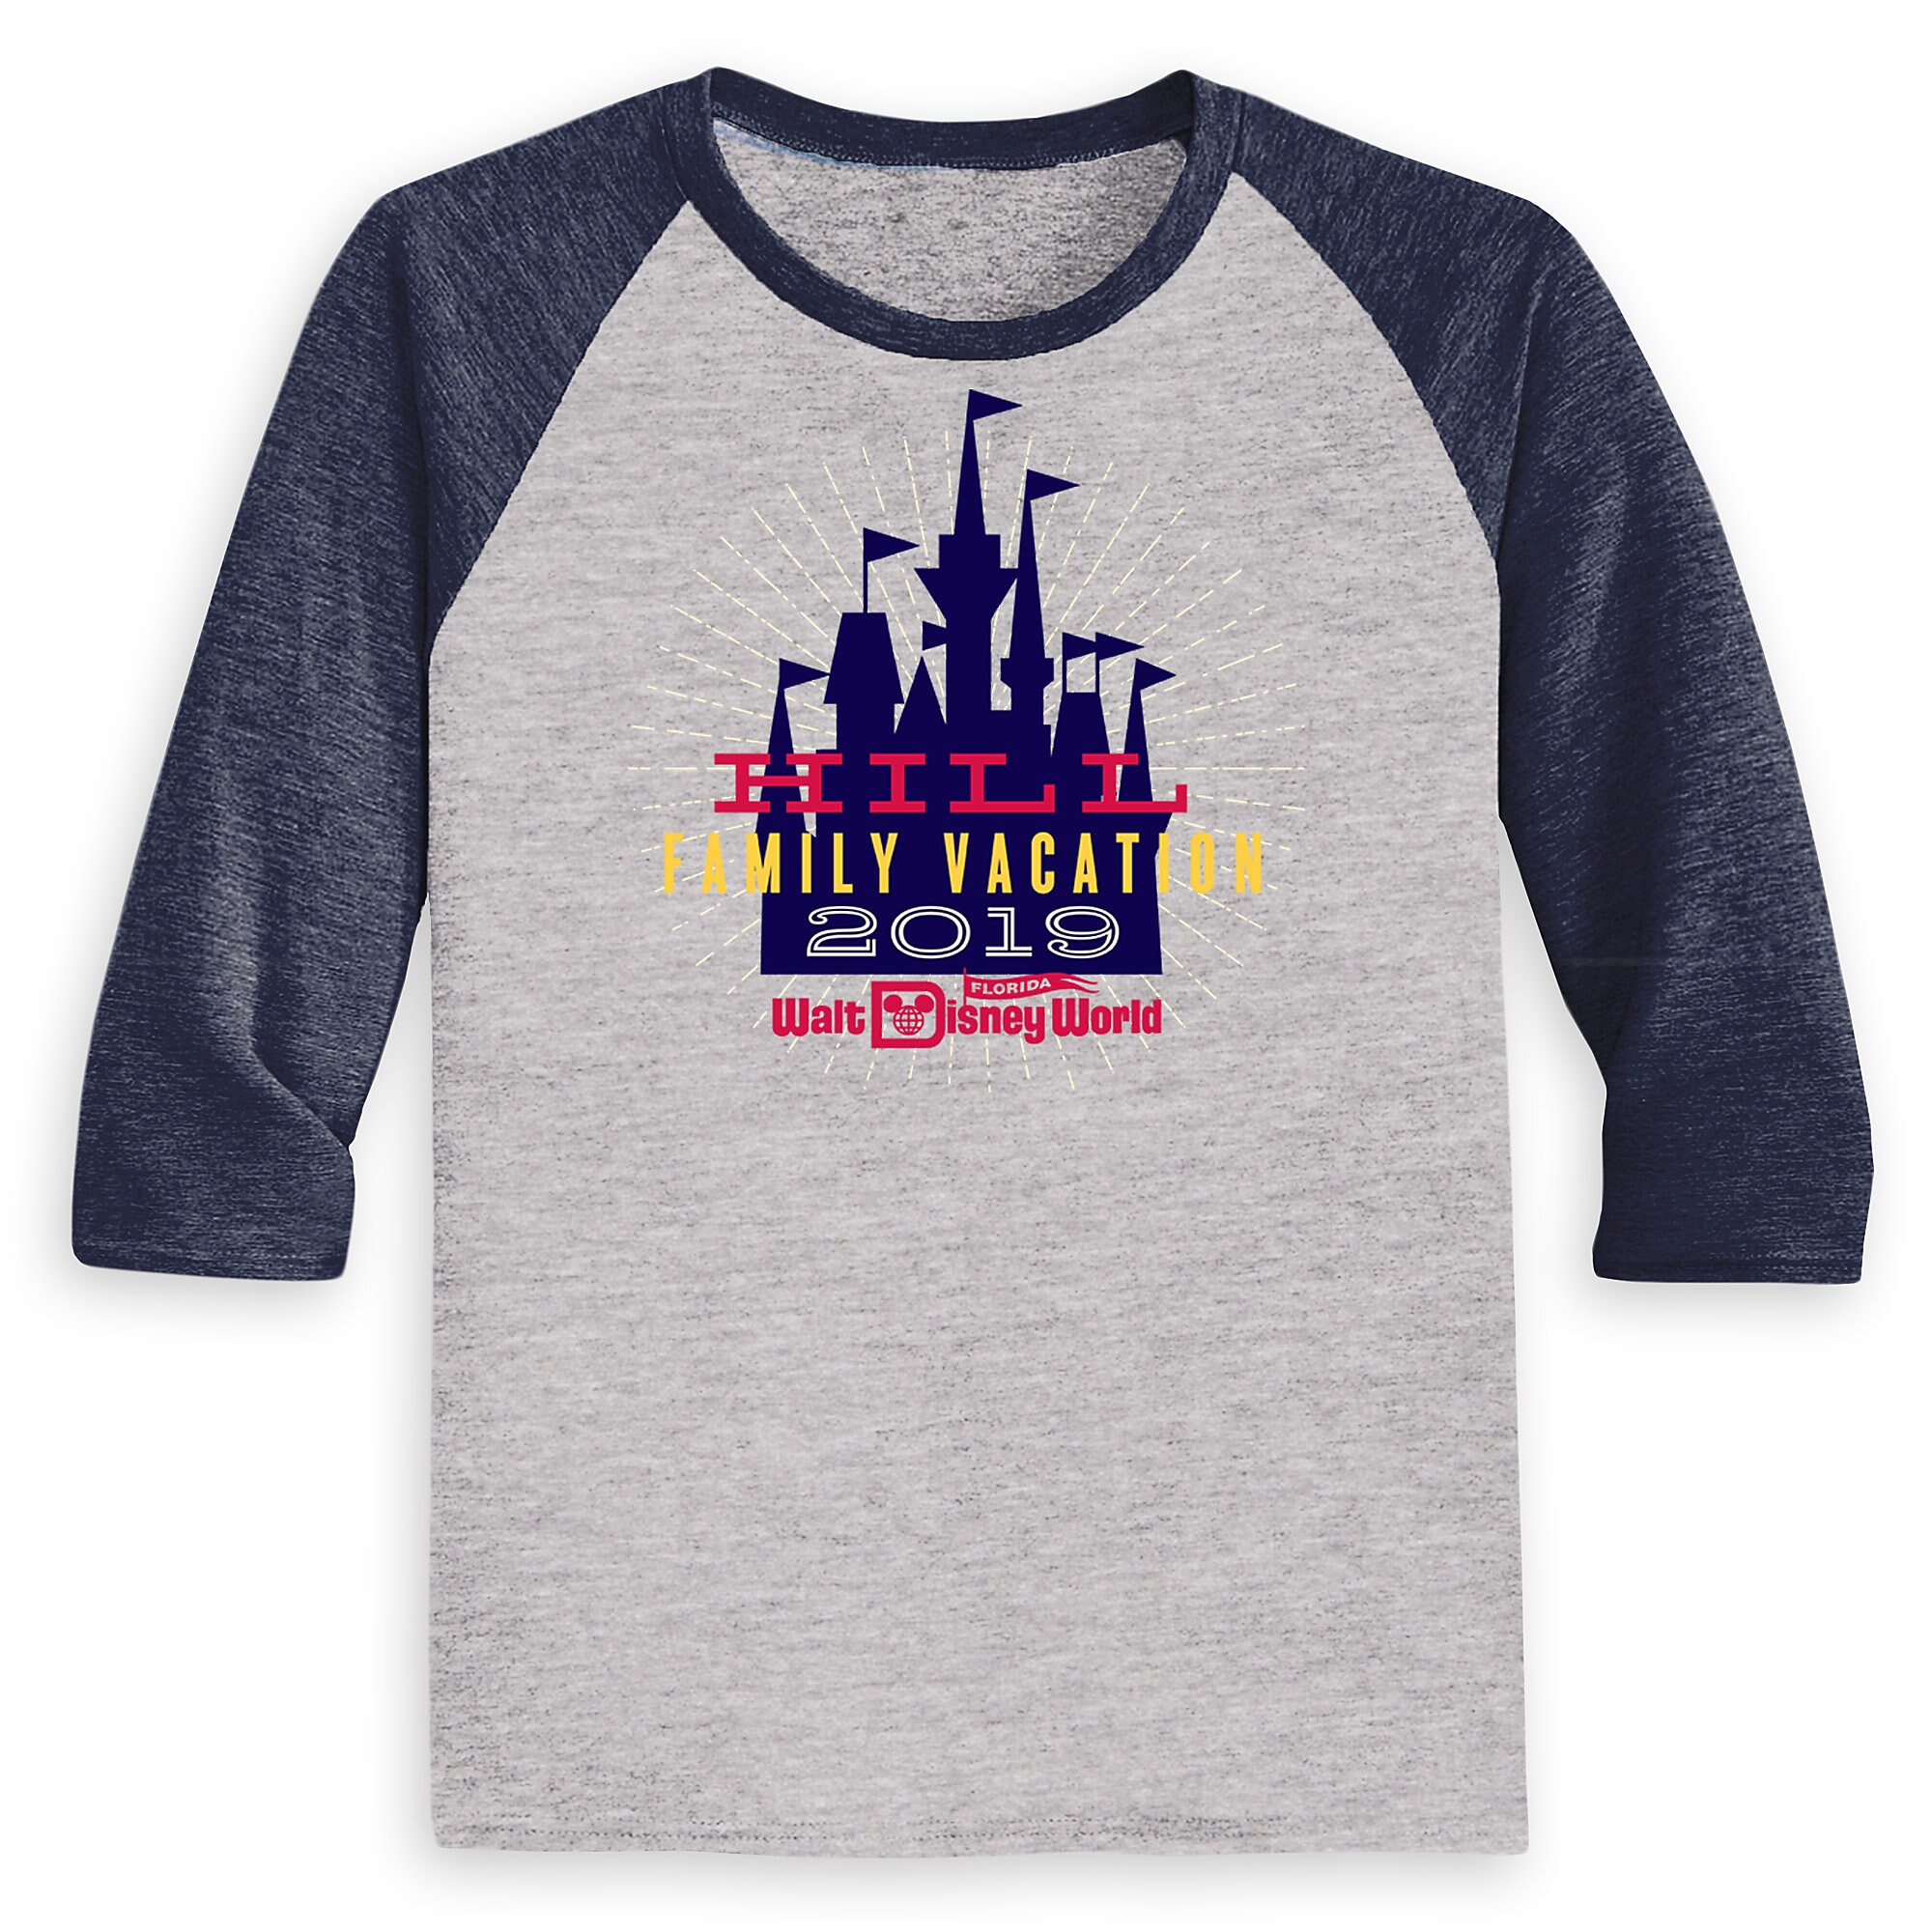 Kids' Cinderella Castle Family Vacation Raglan Shirt - Walt Disney World - 2019 - Customized